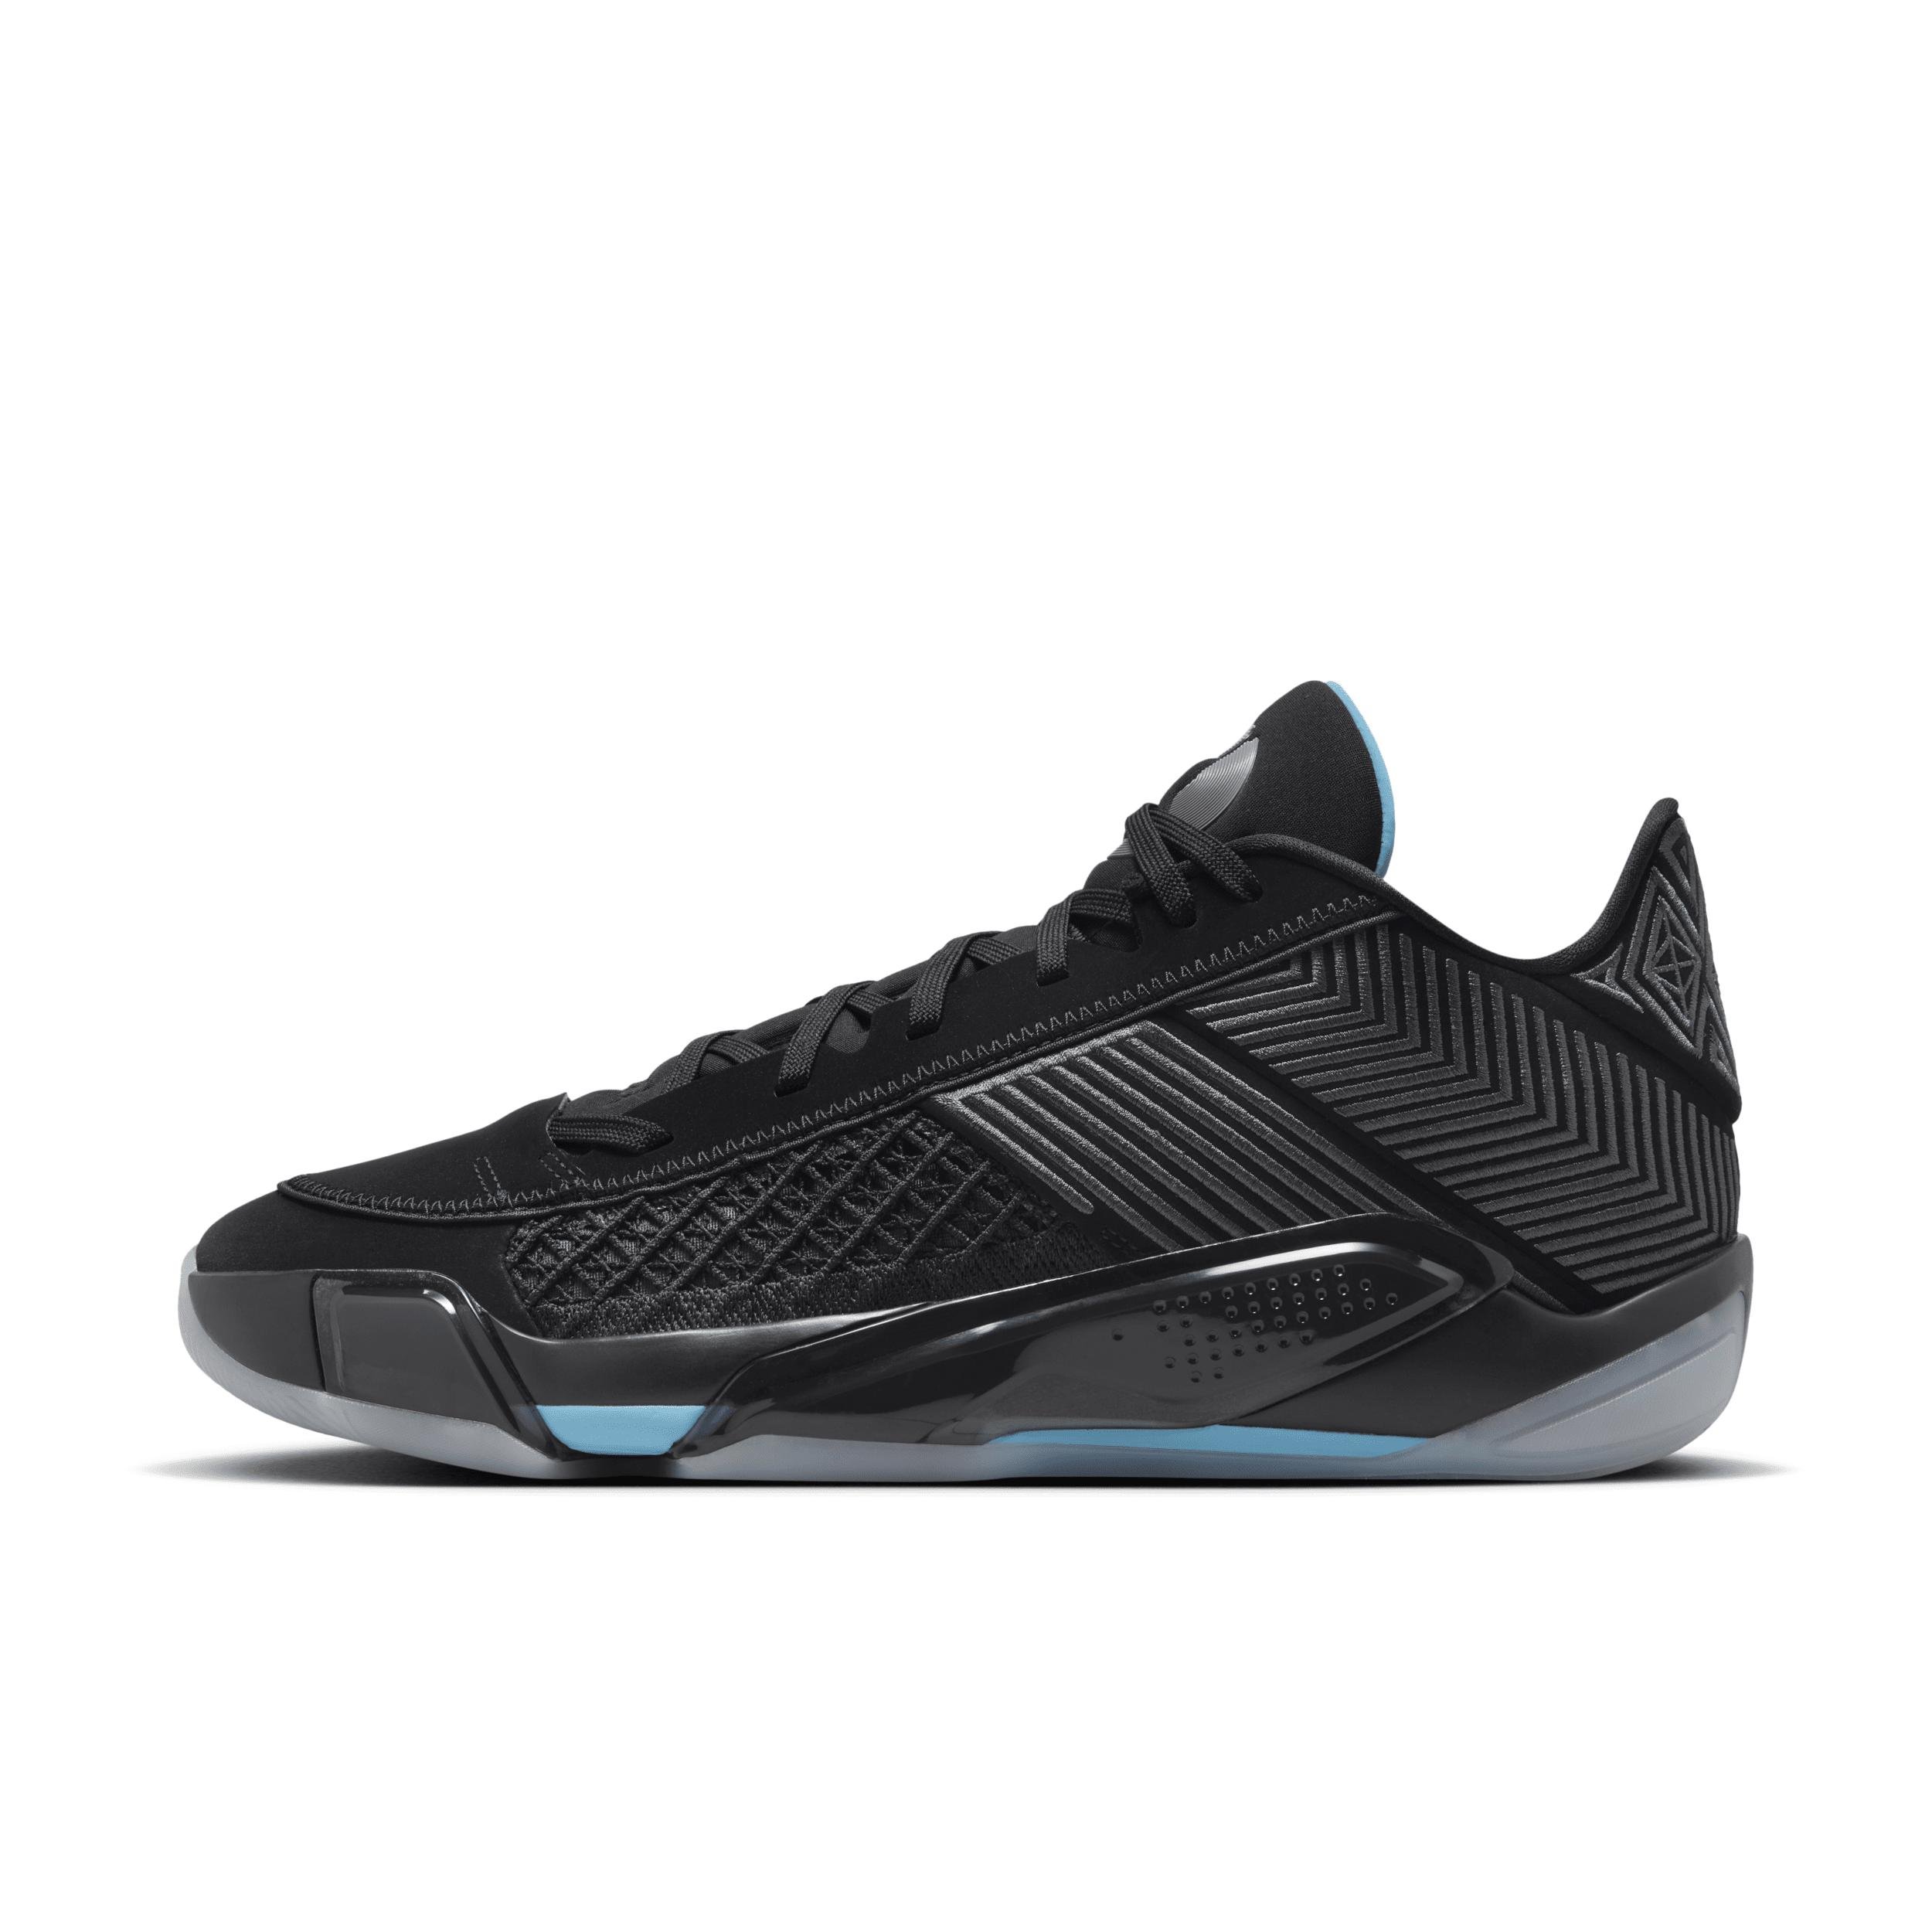 Men's Air Jordan XXXVIII Low "Alumni Blue" Basketball Shoes by JORDAN